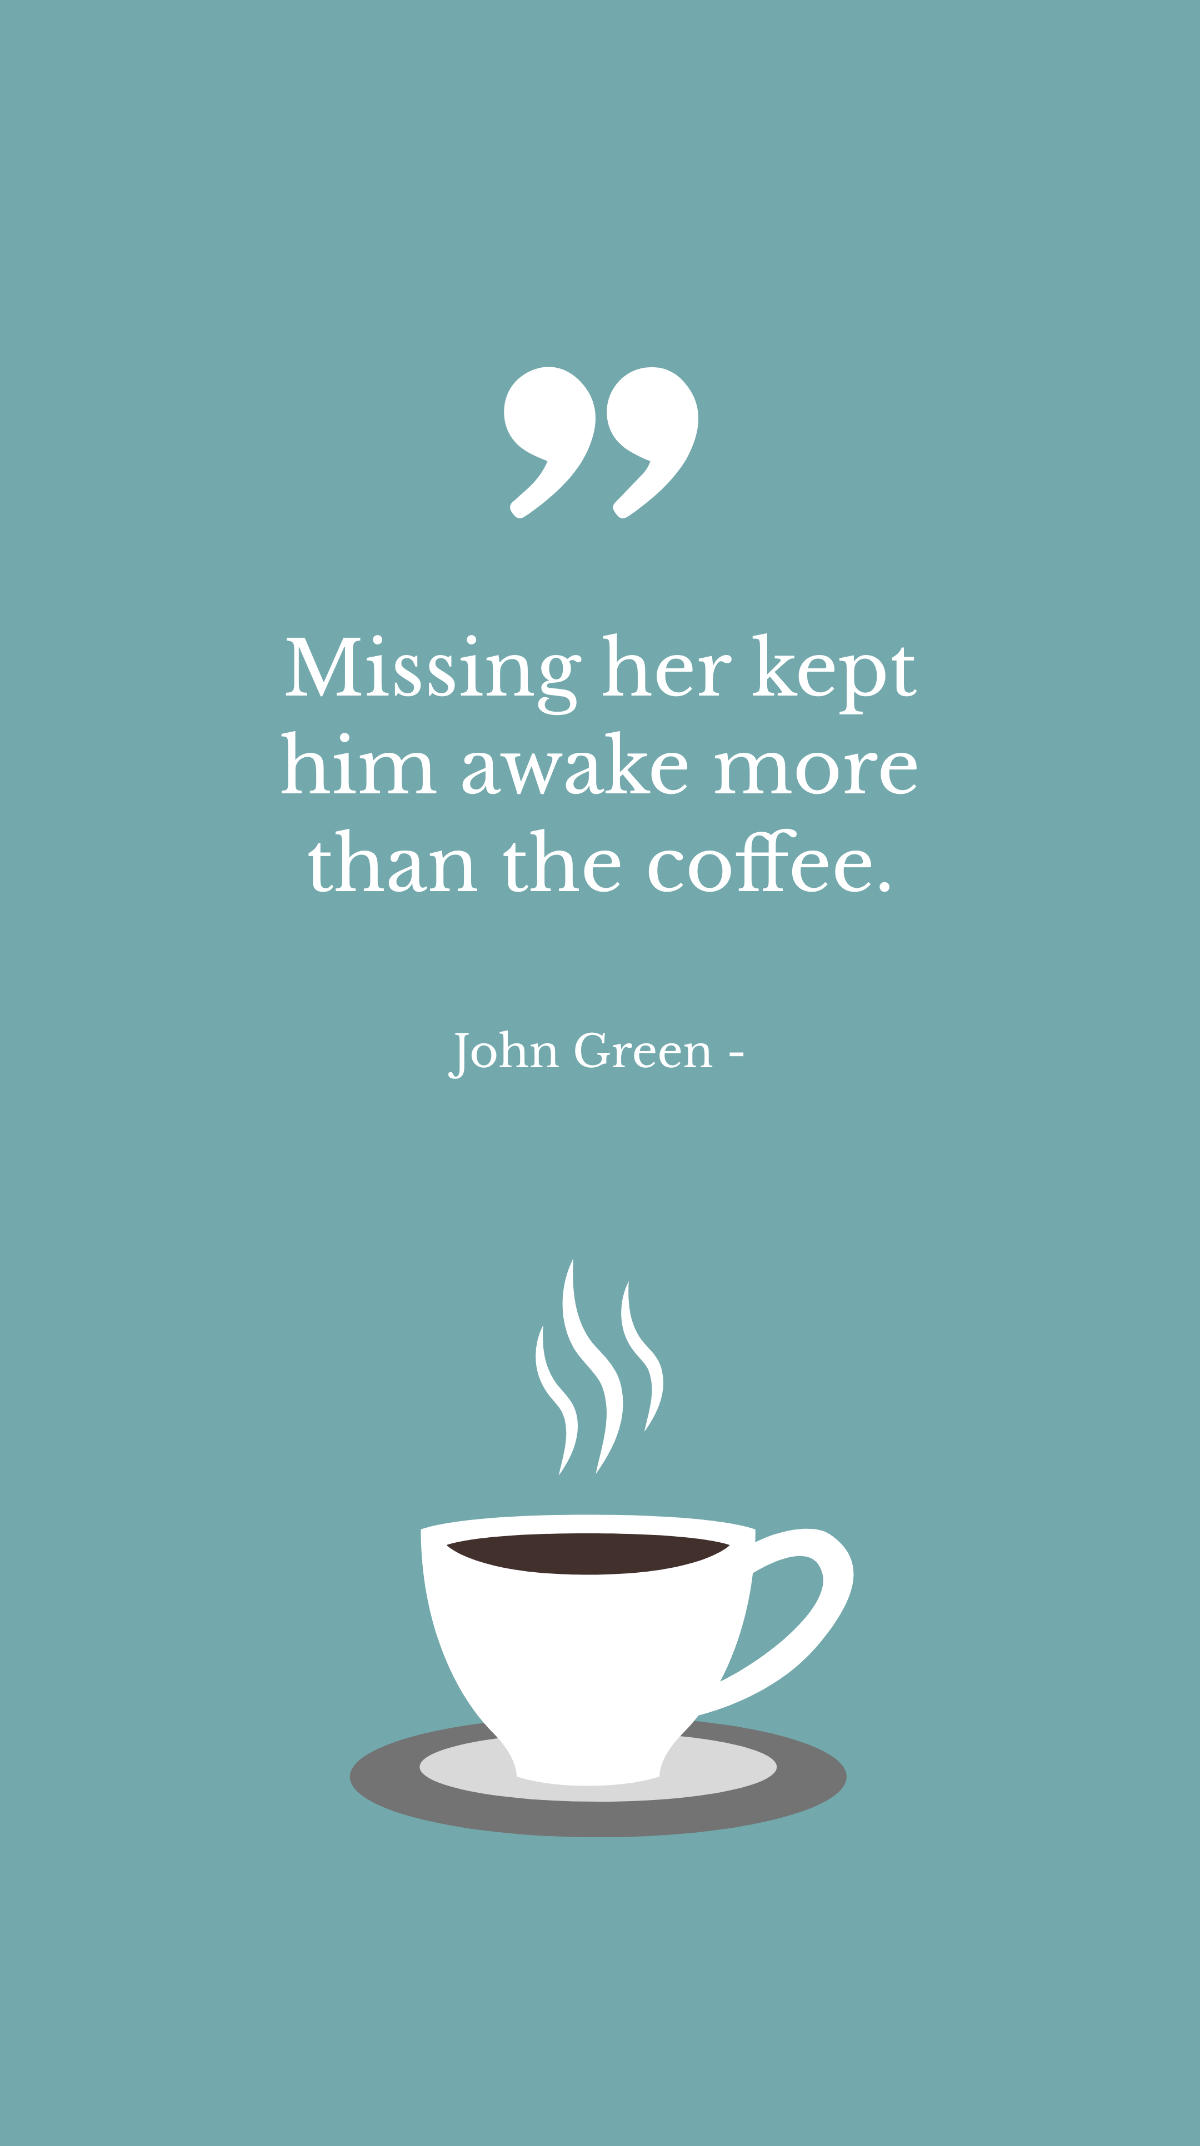 Free John Green - Missing her kept him awake more than the coffee. Template